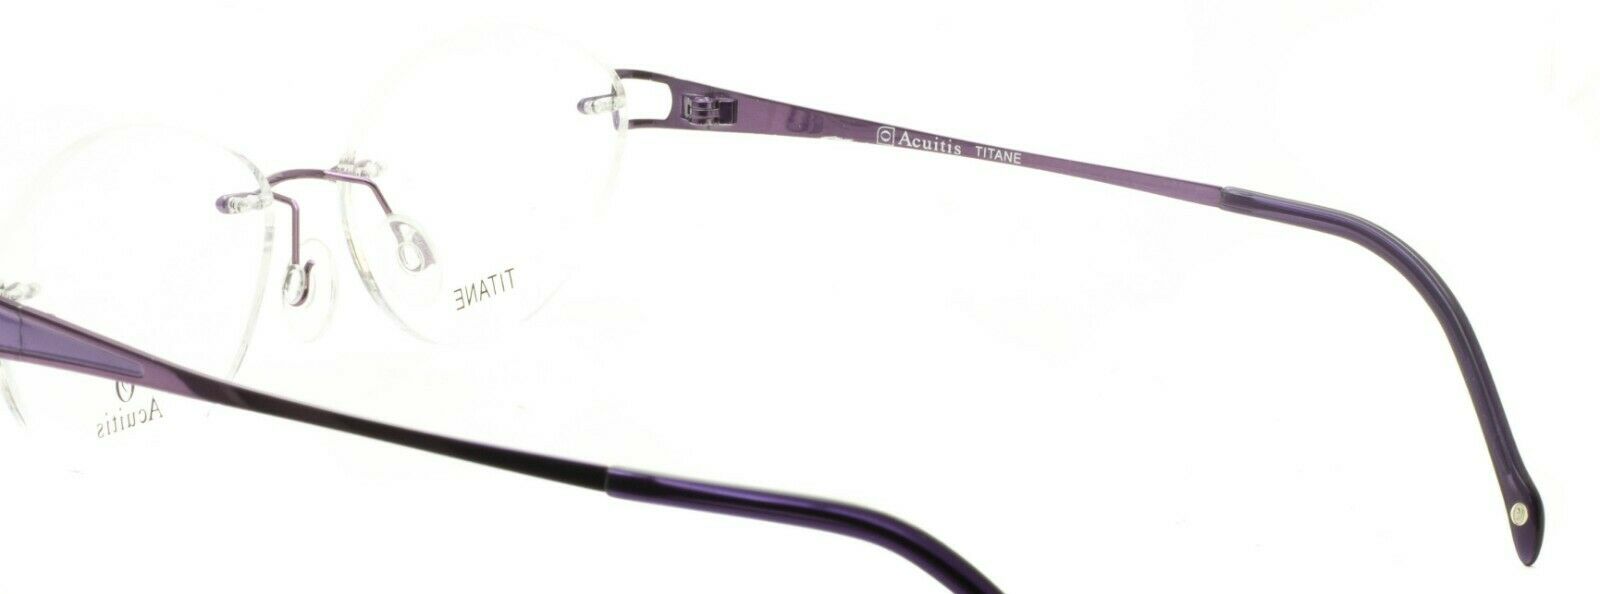 ACUITIS NADINE VIOLET Titane 53mm Glasses RX Optical Eyeglasses Eyewear - New